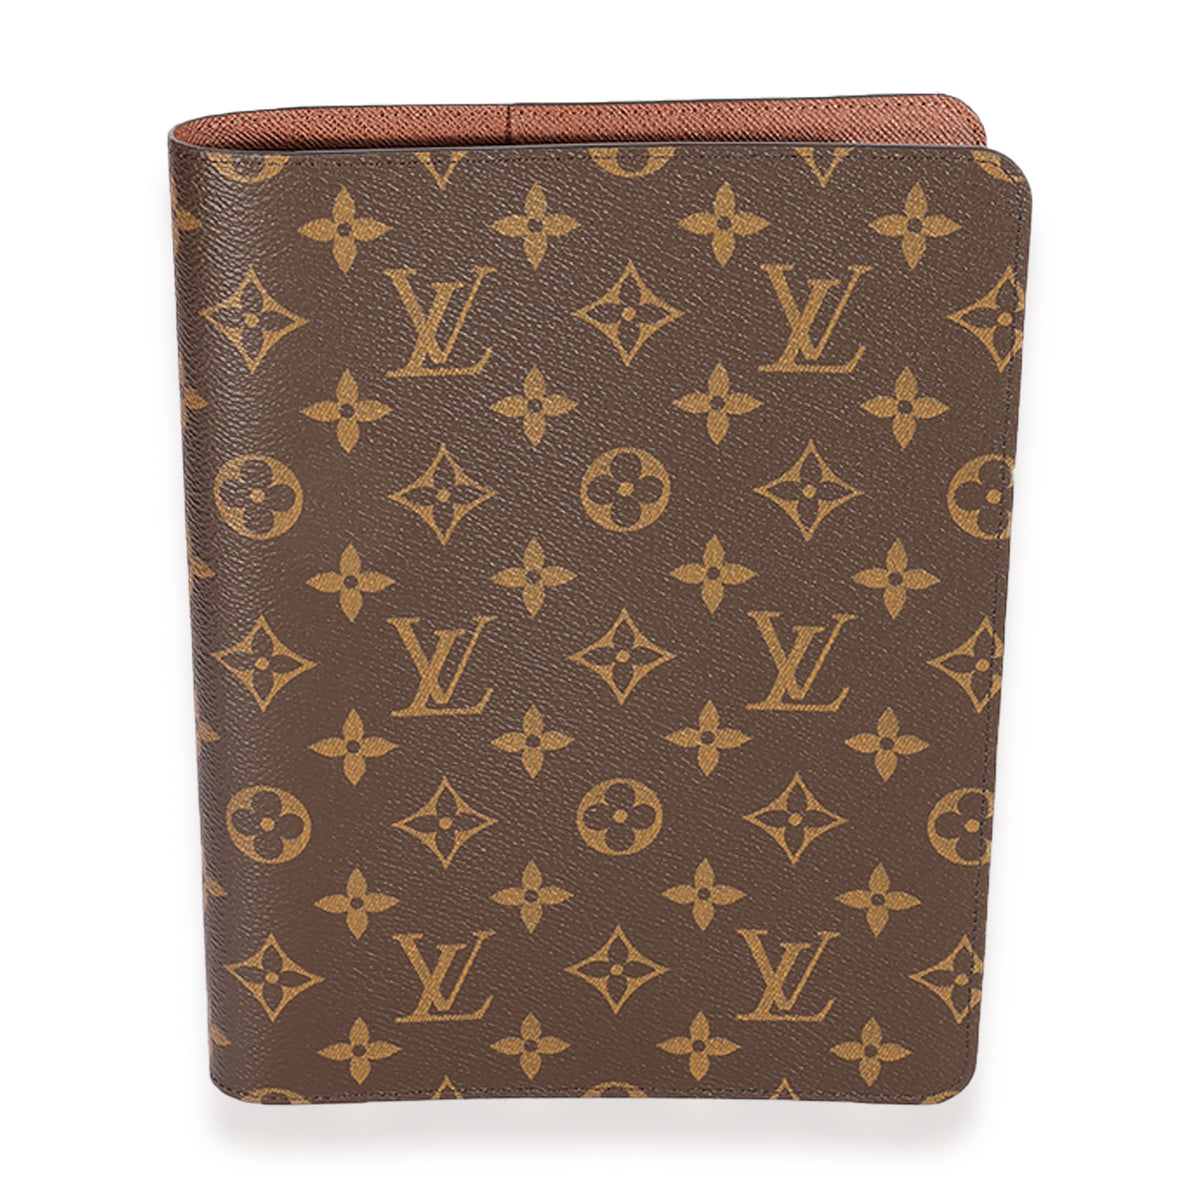 Louis Vuitton desk agenda cover